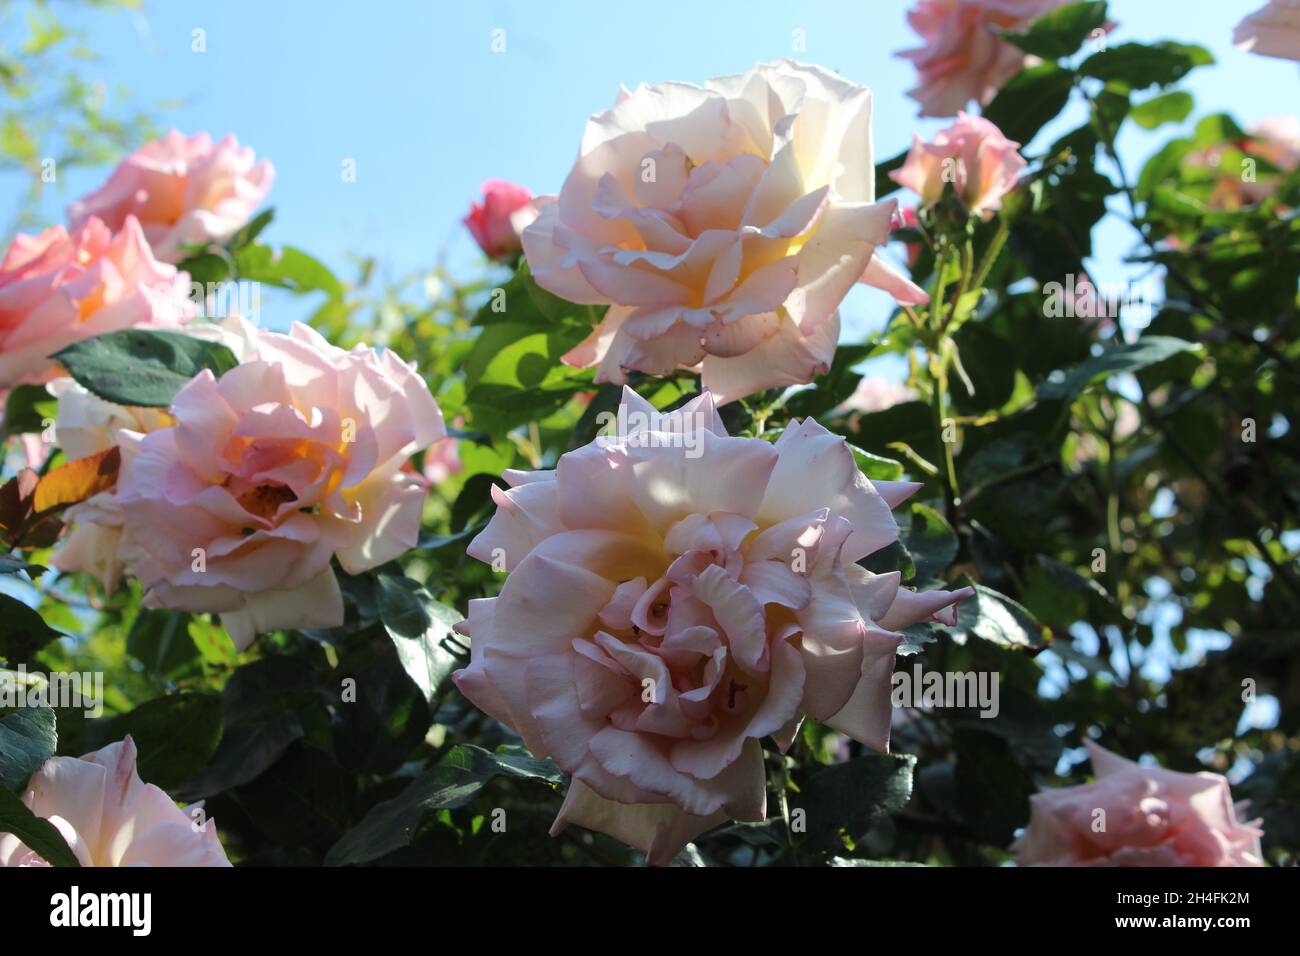 Hellrosa bis weiße Blüten der Kletterrose Compasión. Foto de stock